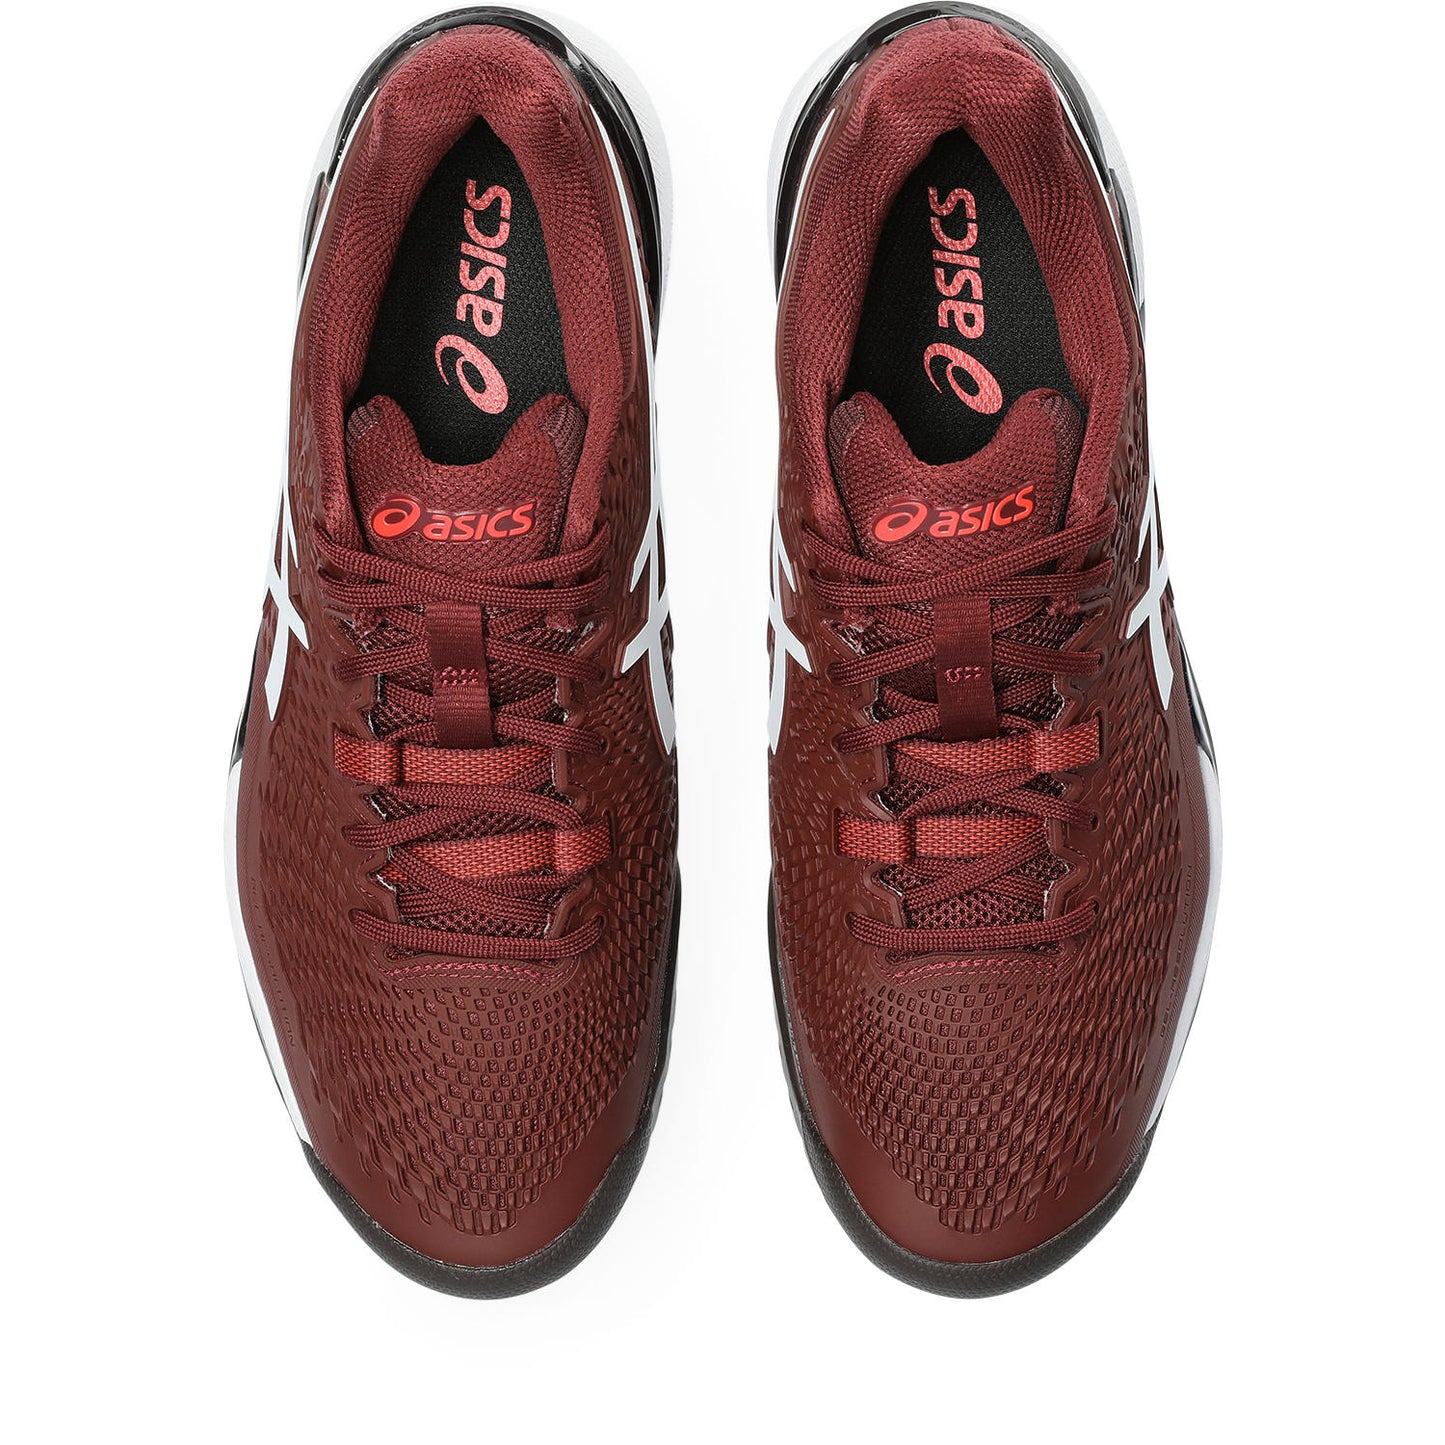 Asics Gel Resolution 9 Men tennis shoes - Antique Red/White 330.600